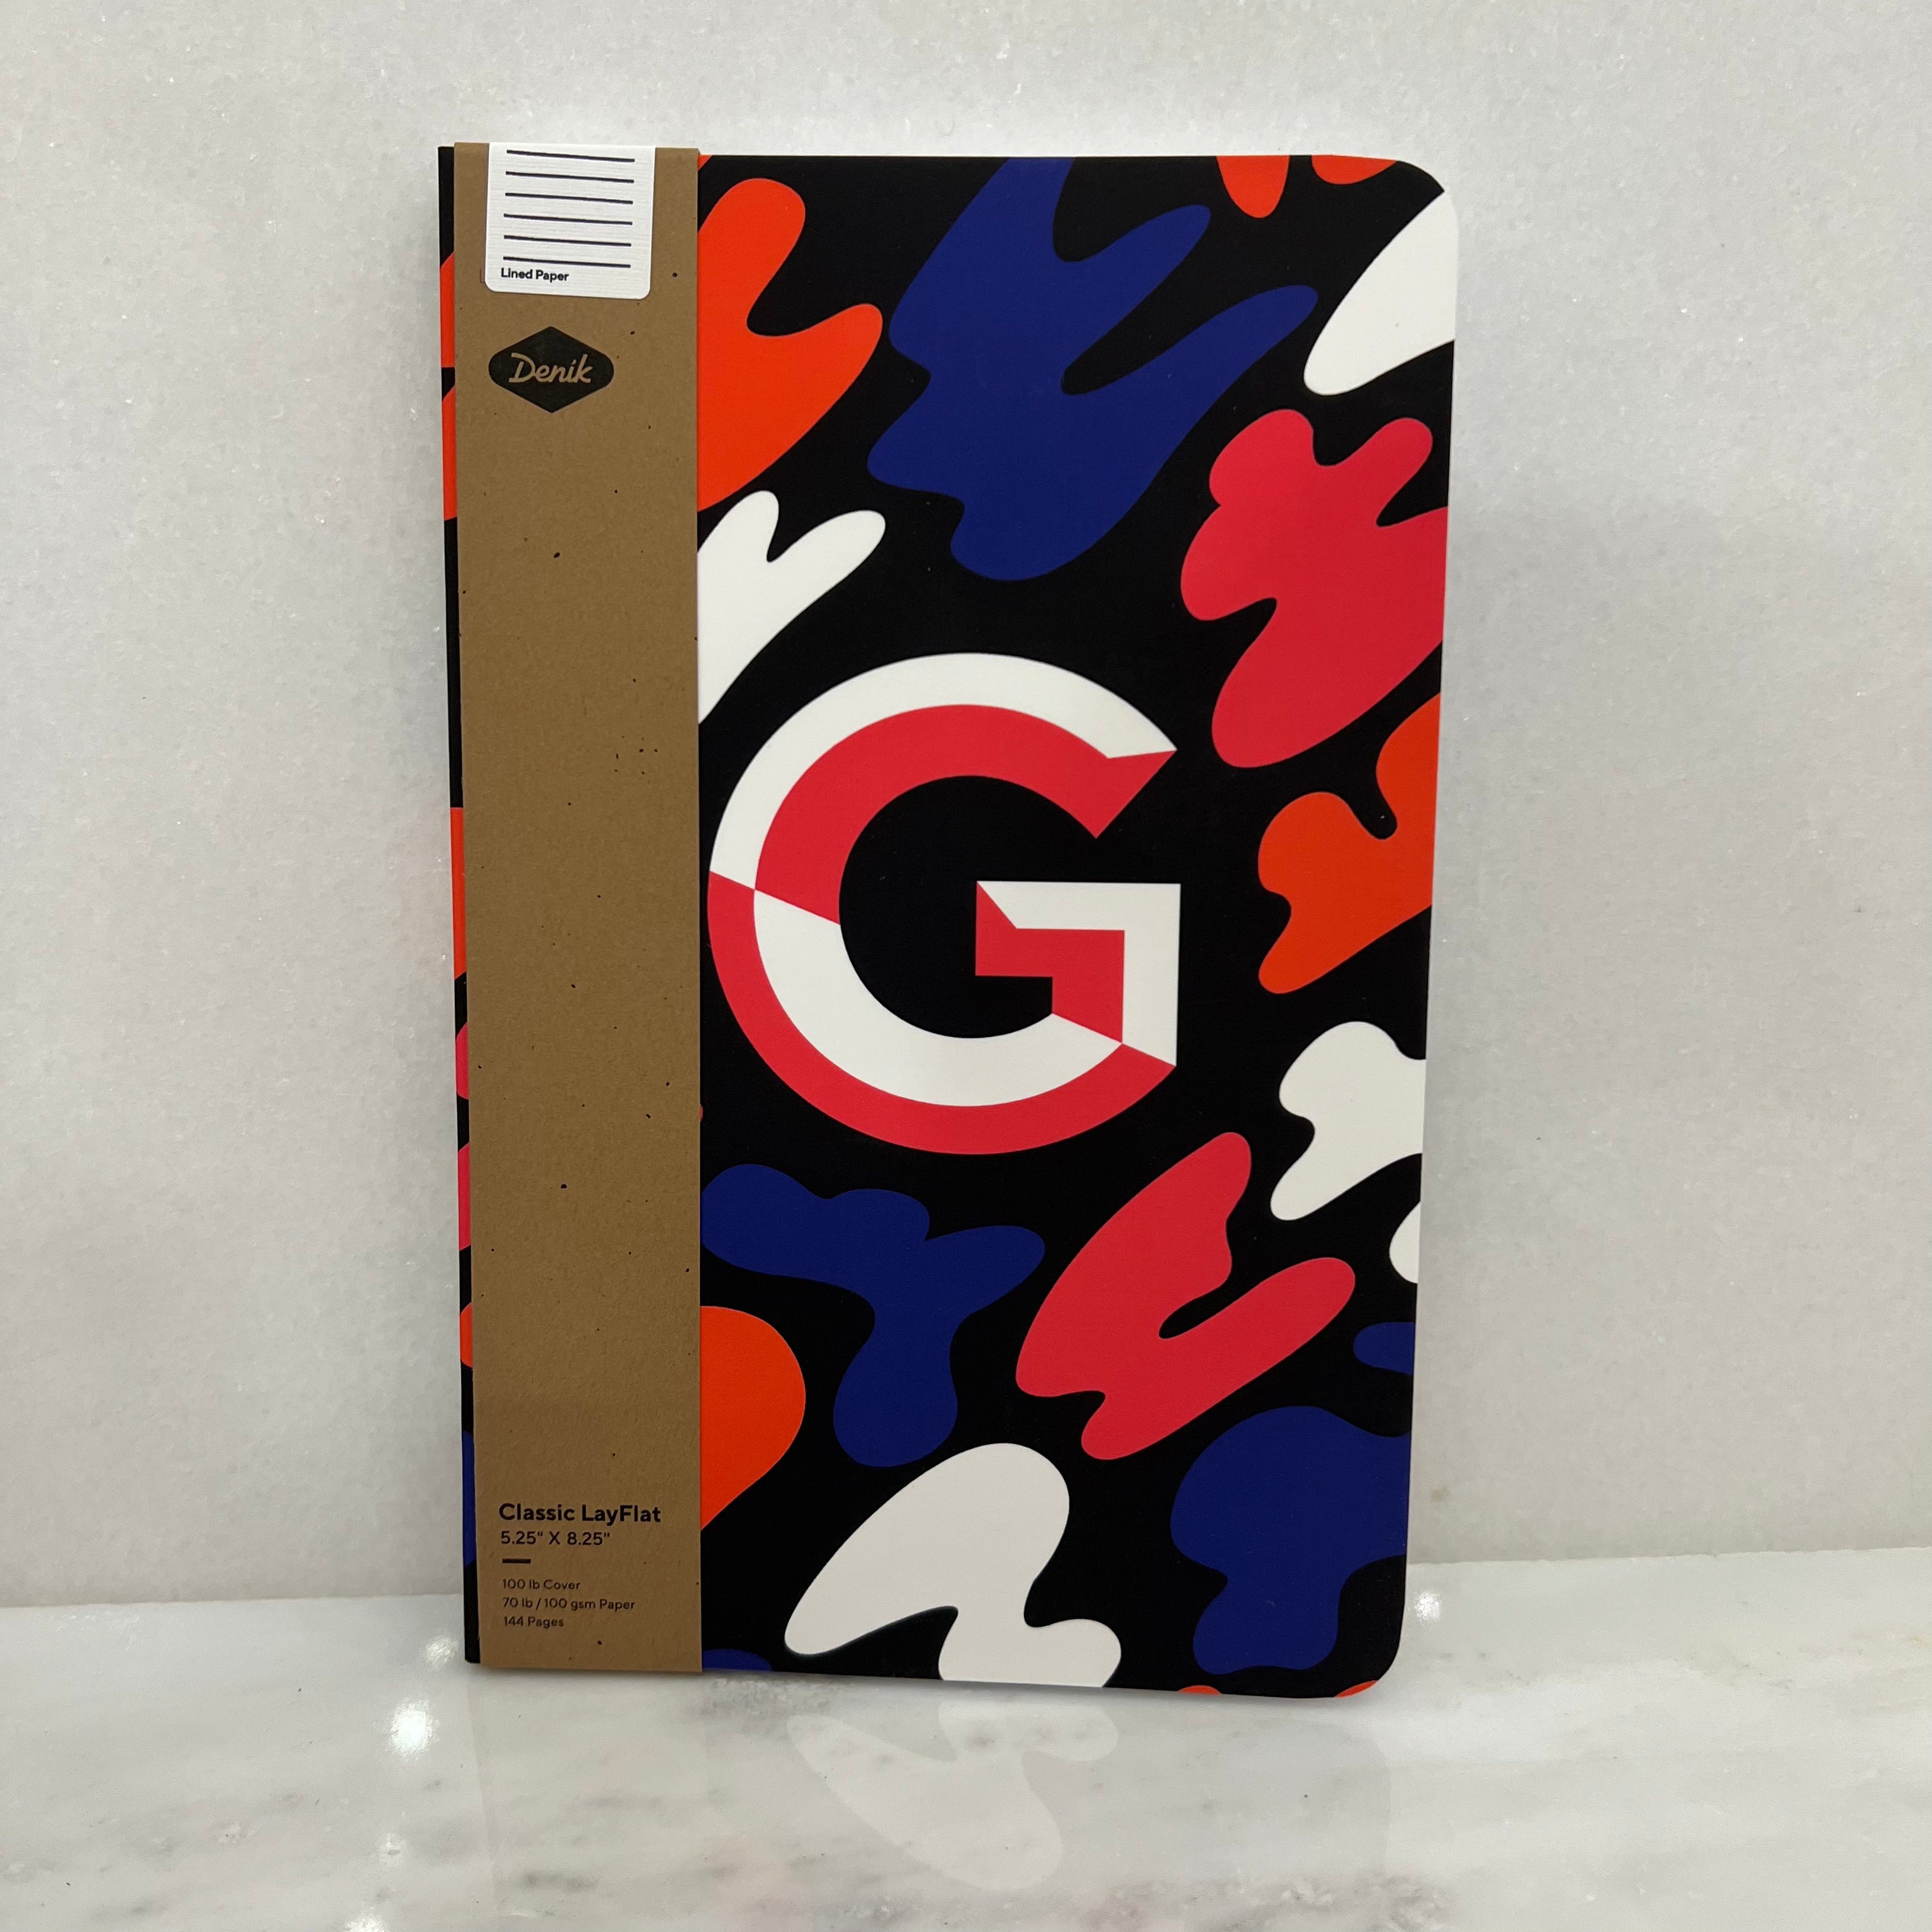 Denik "G" classic layflat notebook